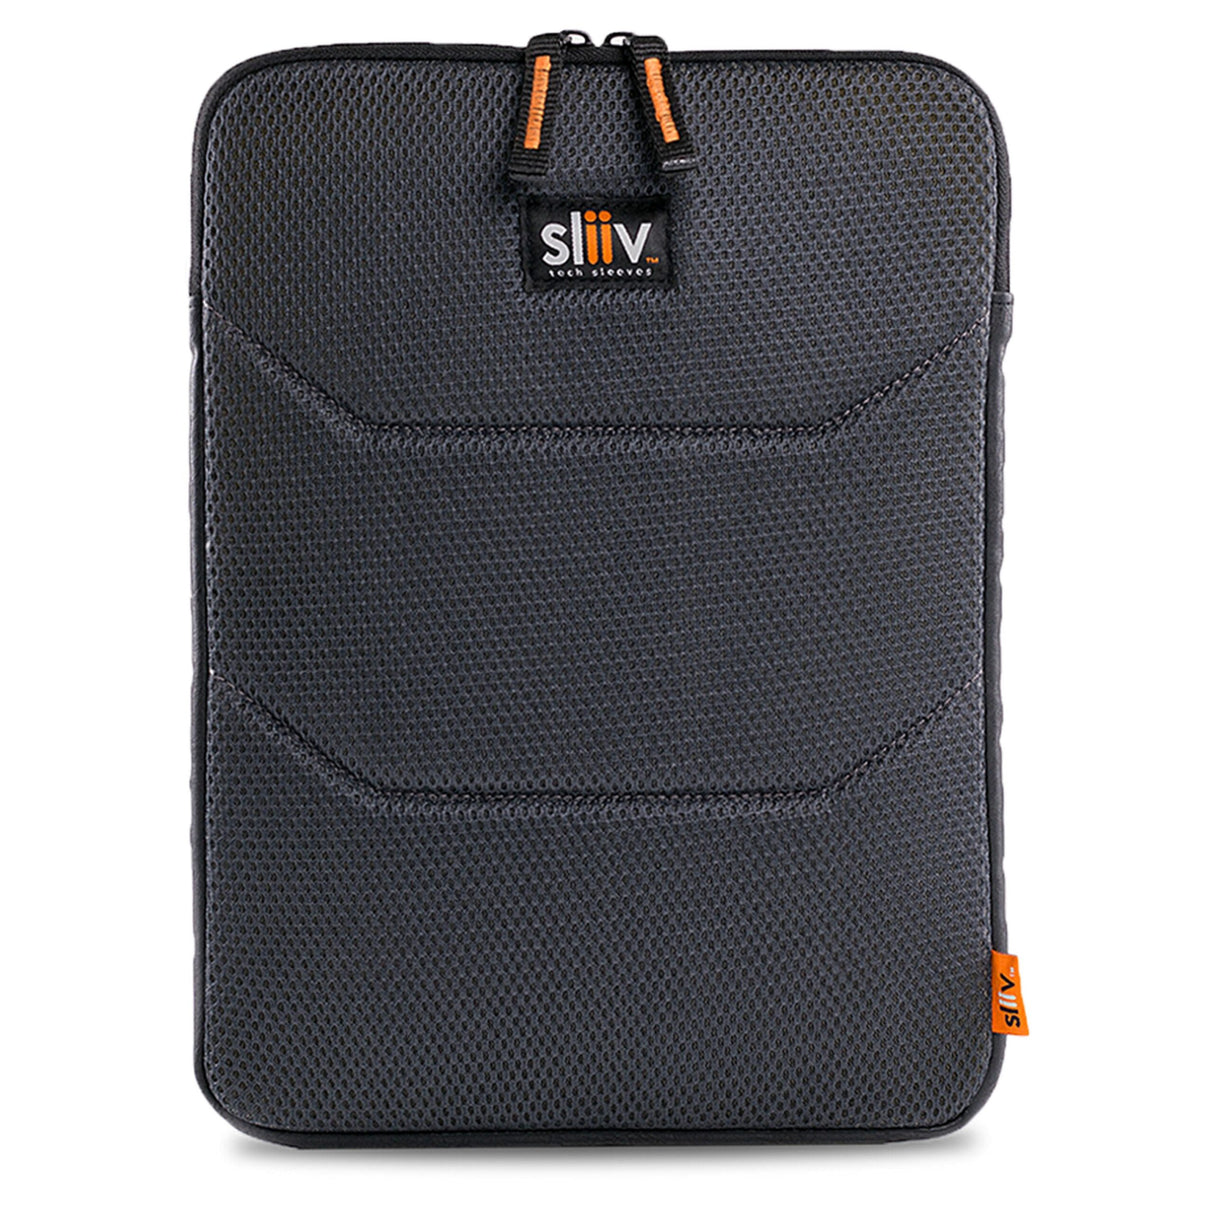 Gruv Gear Sliiv Tech Sleeve Case for iPad Pro  (SLIIV-TECH2-PRO)